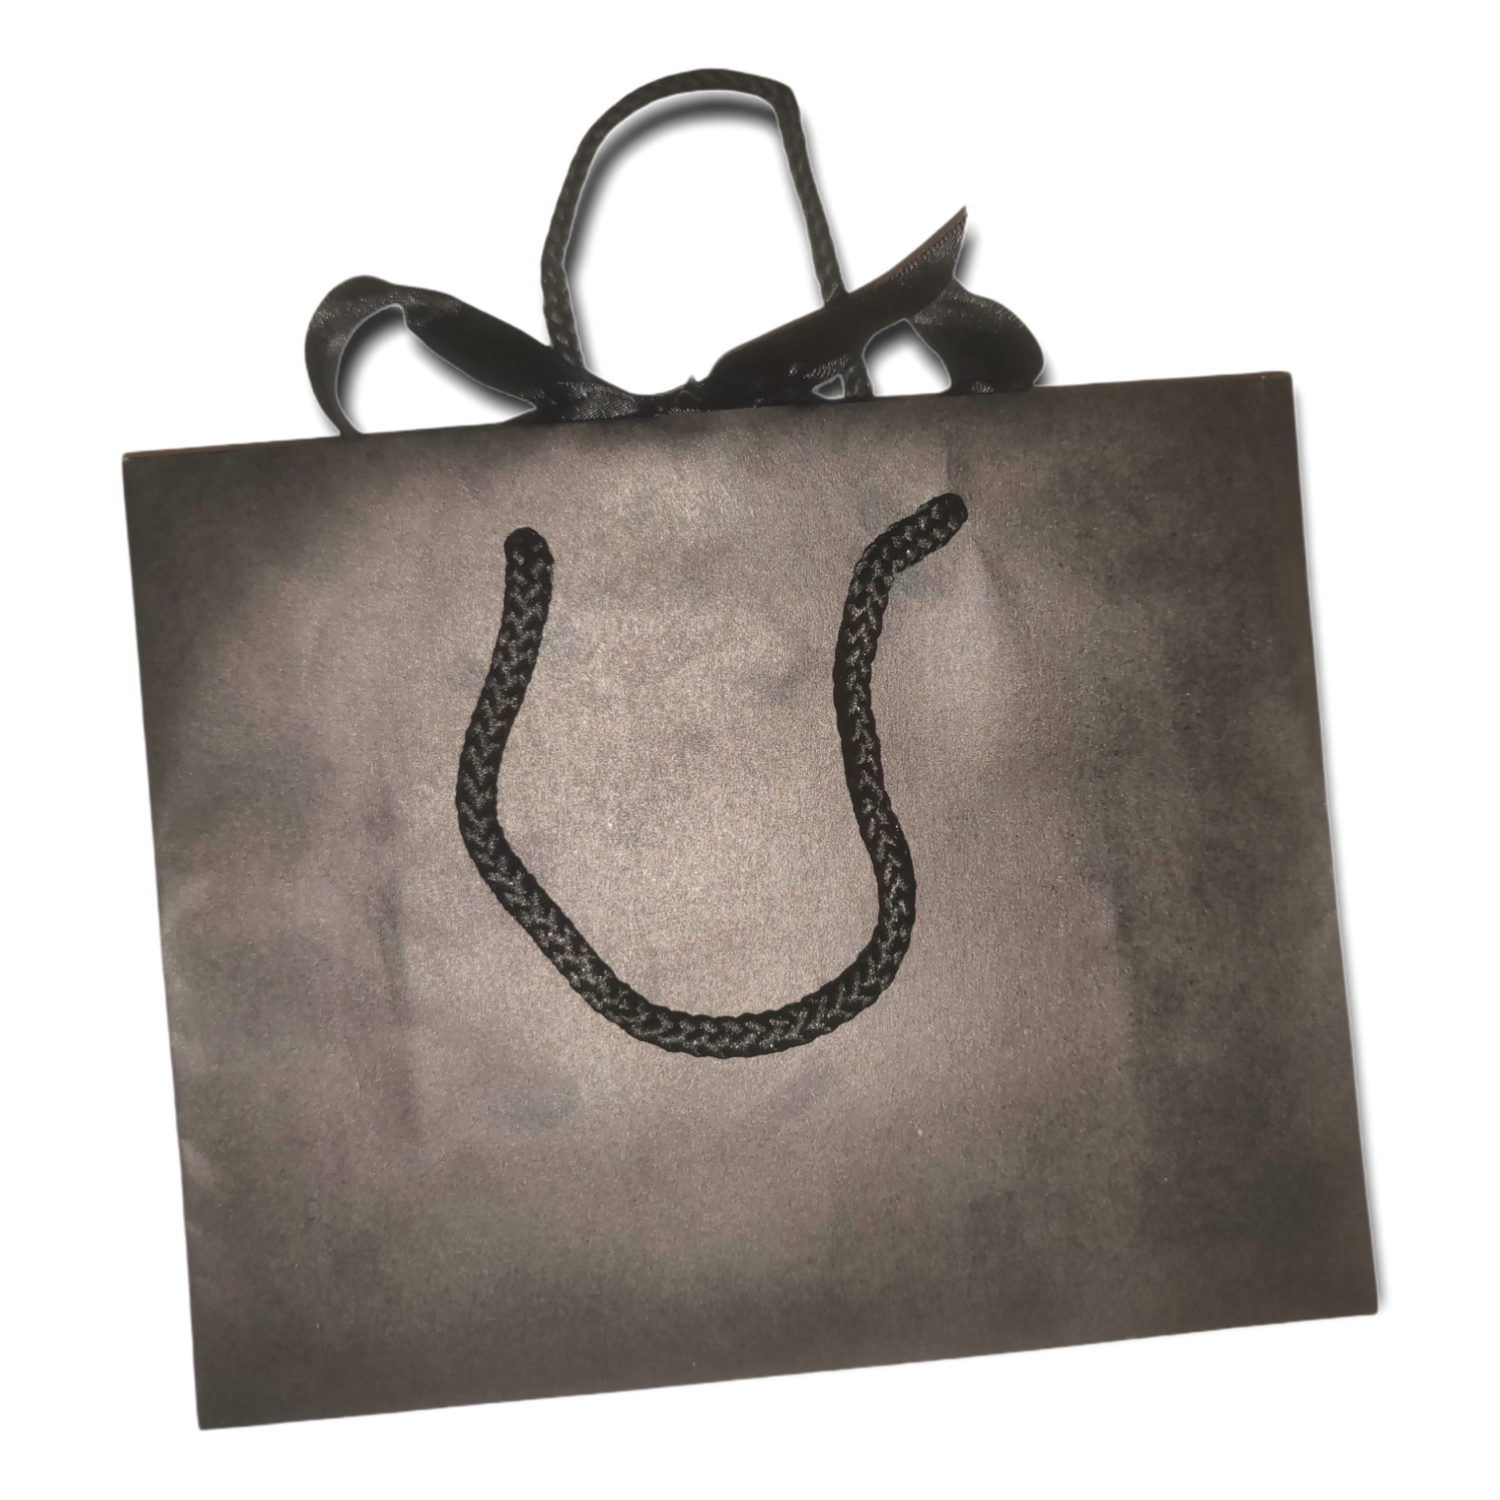 2x Black Giftbag With Handles + Ribbon 16x20x8cm